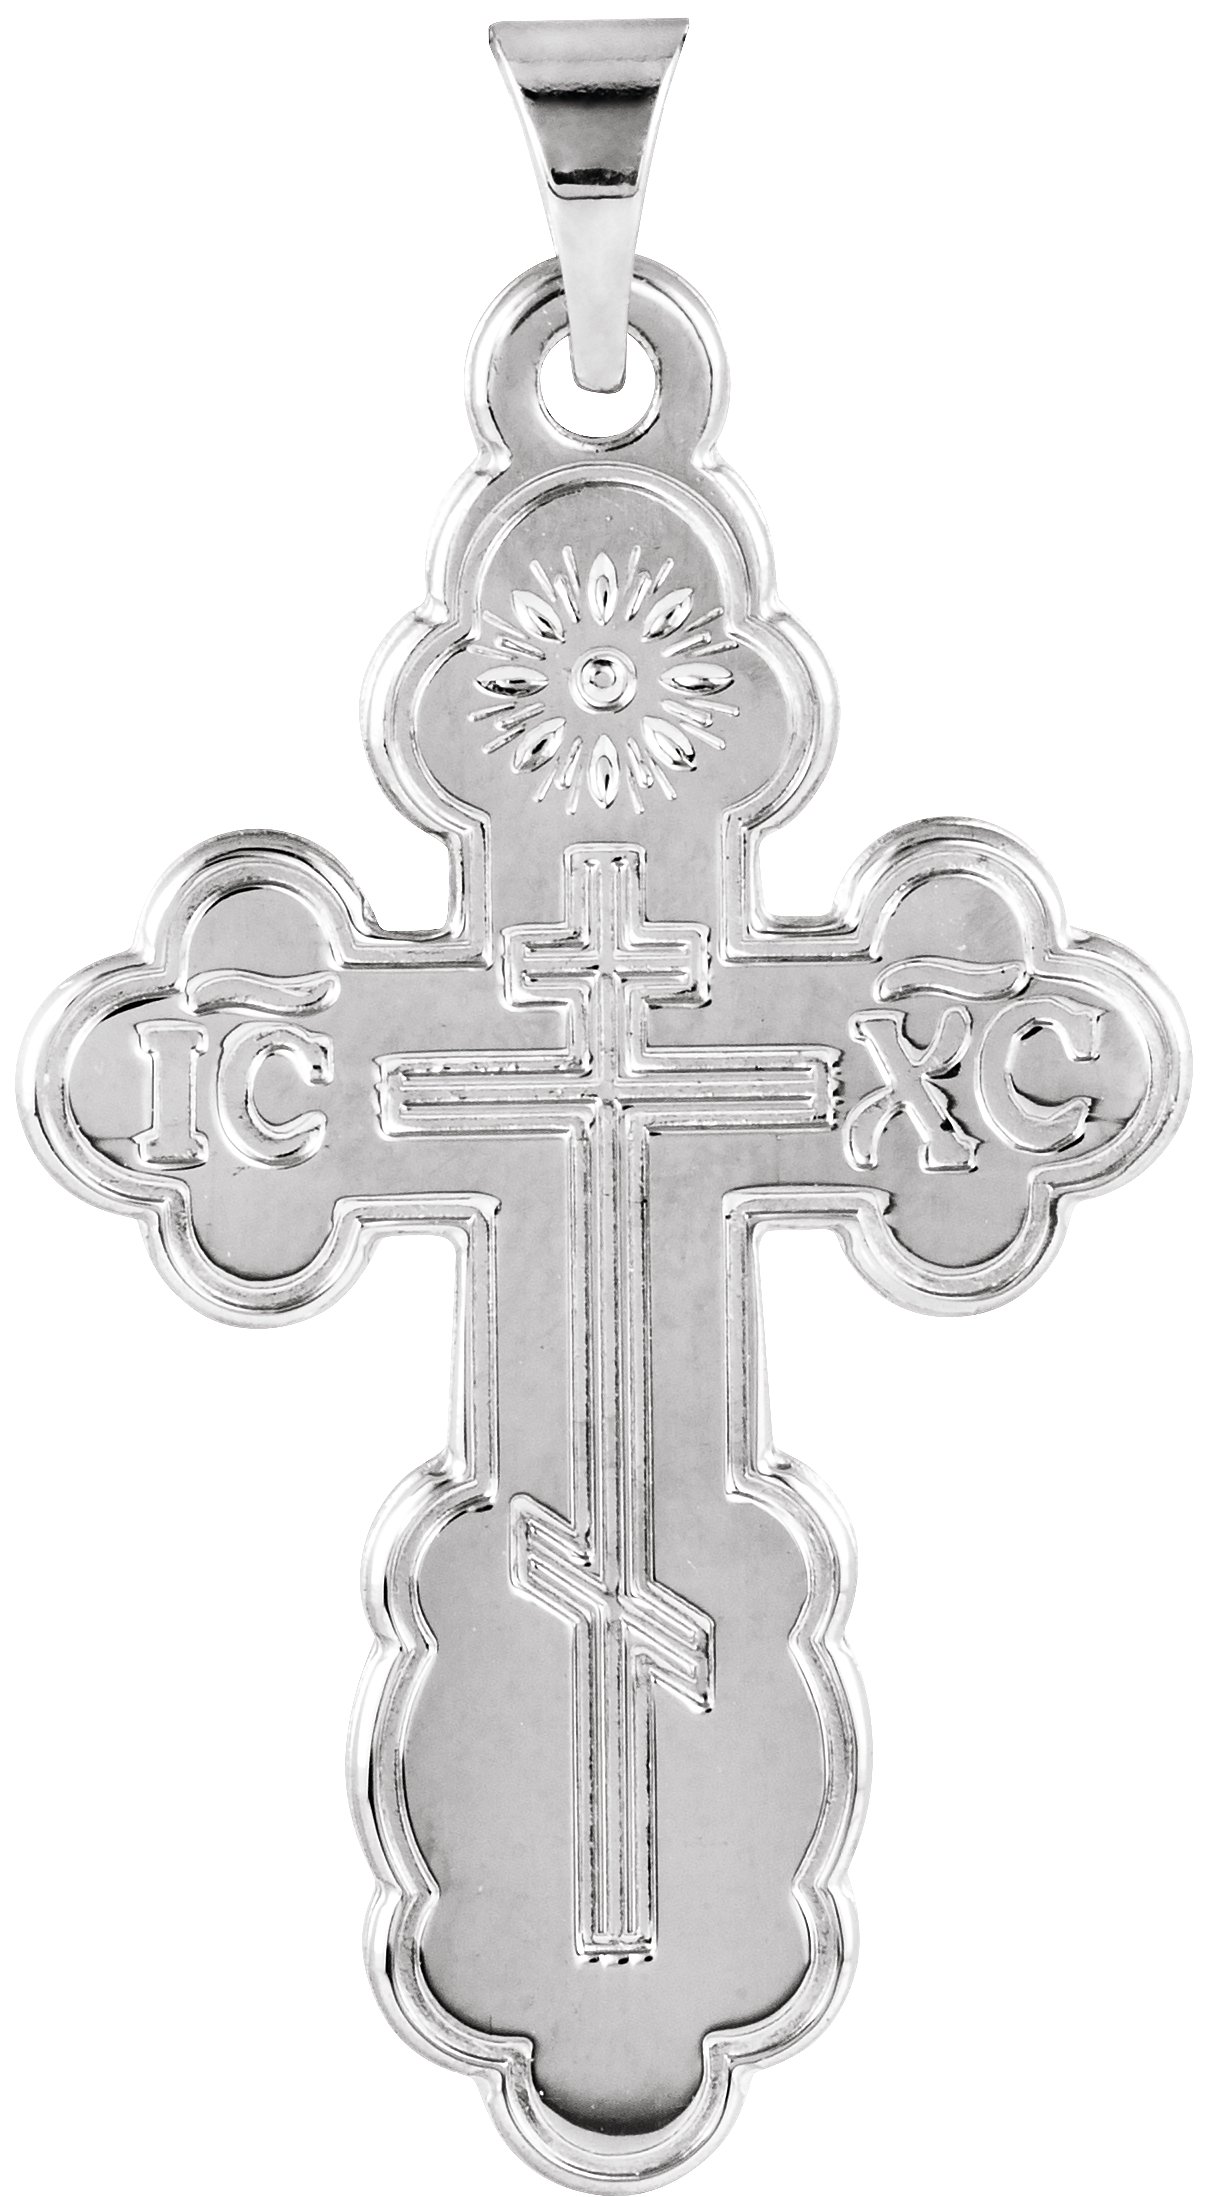 Russian Orthodox St. Olga Cross Pendant Ref 856849